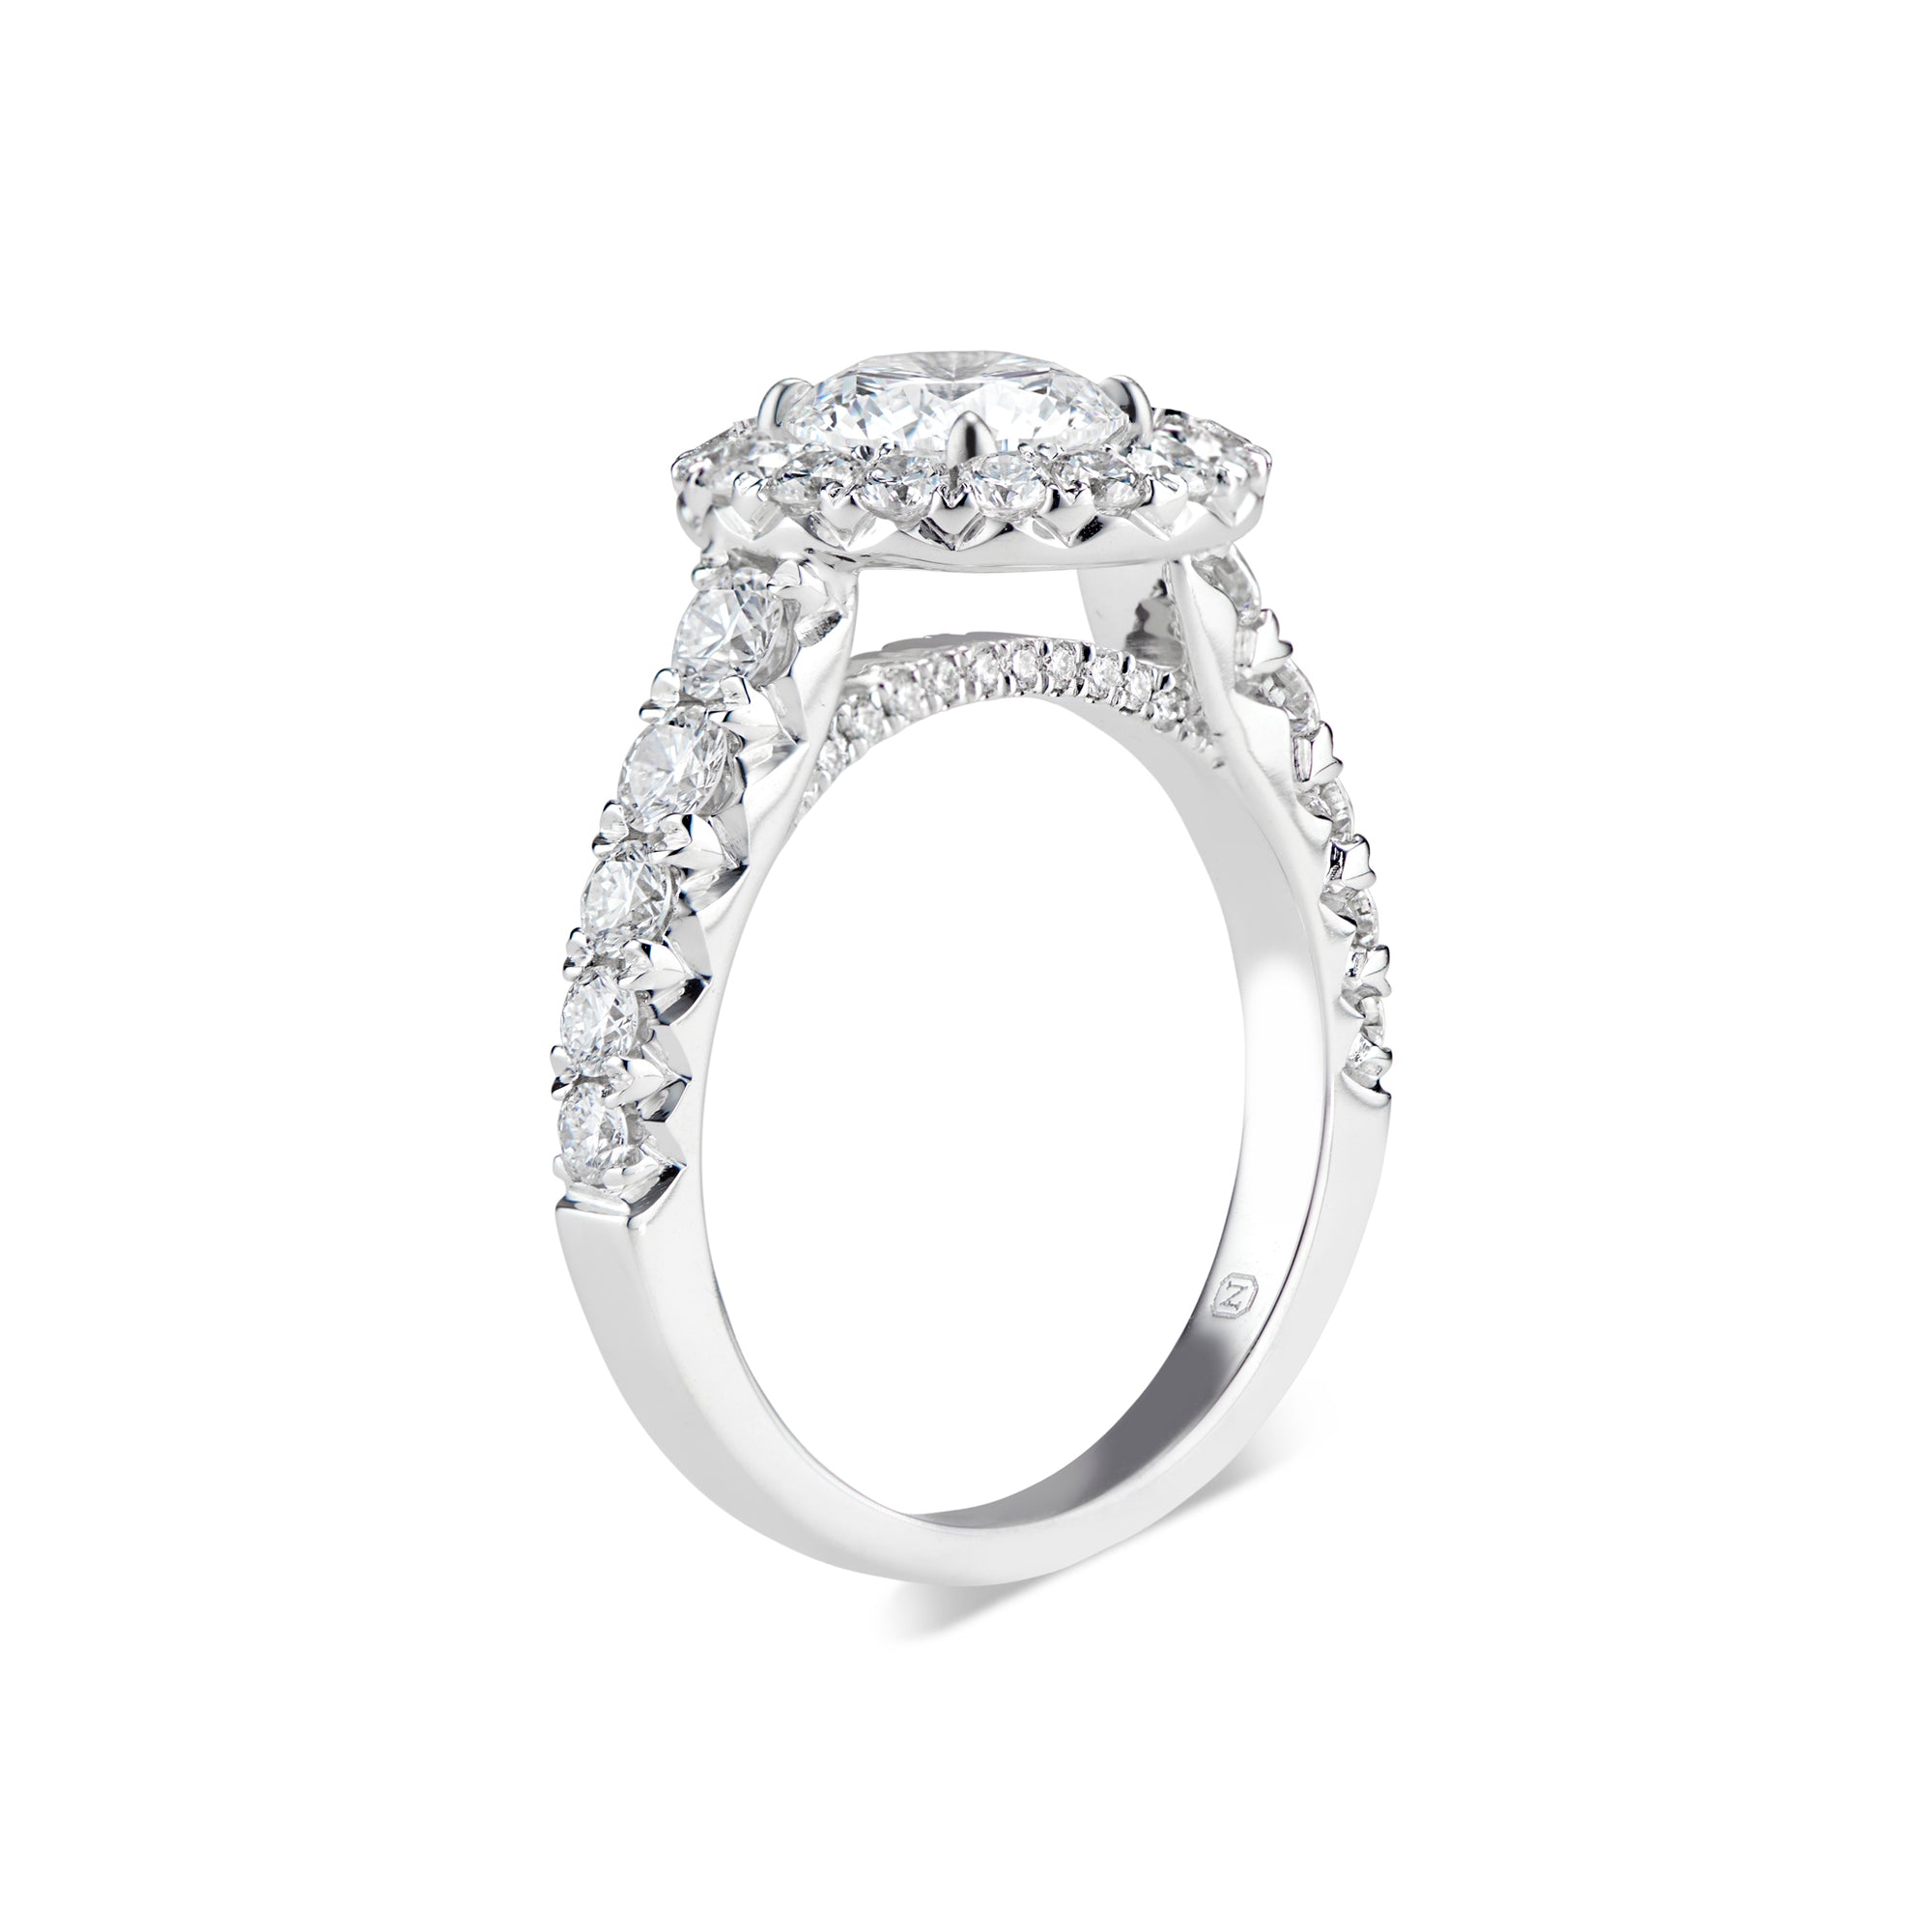 Round Diamond Halo Engagement Ring  -18K weighting 5.30 GR  - 46 round diamonds totaling 1.22 carats